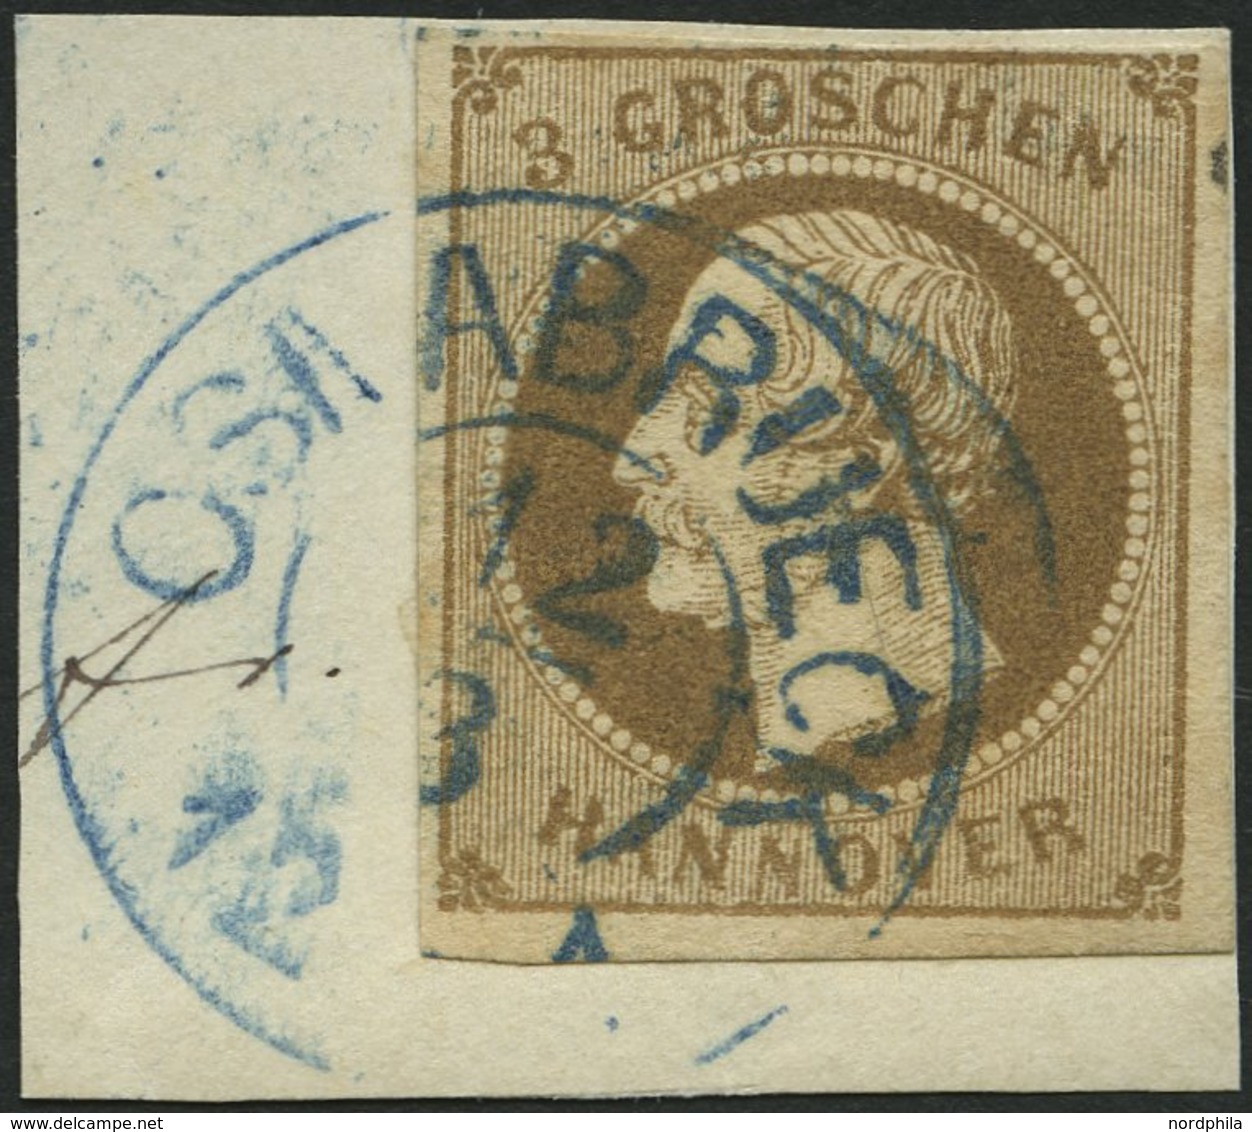 HANNOVER 19a BrfStk, 1861, 3 Gr. Braun, Blauer K2 OSNABRÜCK, Prachtbriefstück, Mi. (70.-) - Hannover